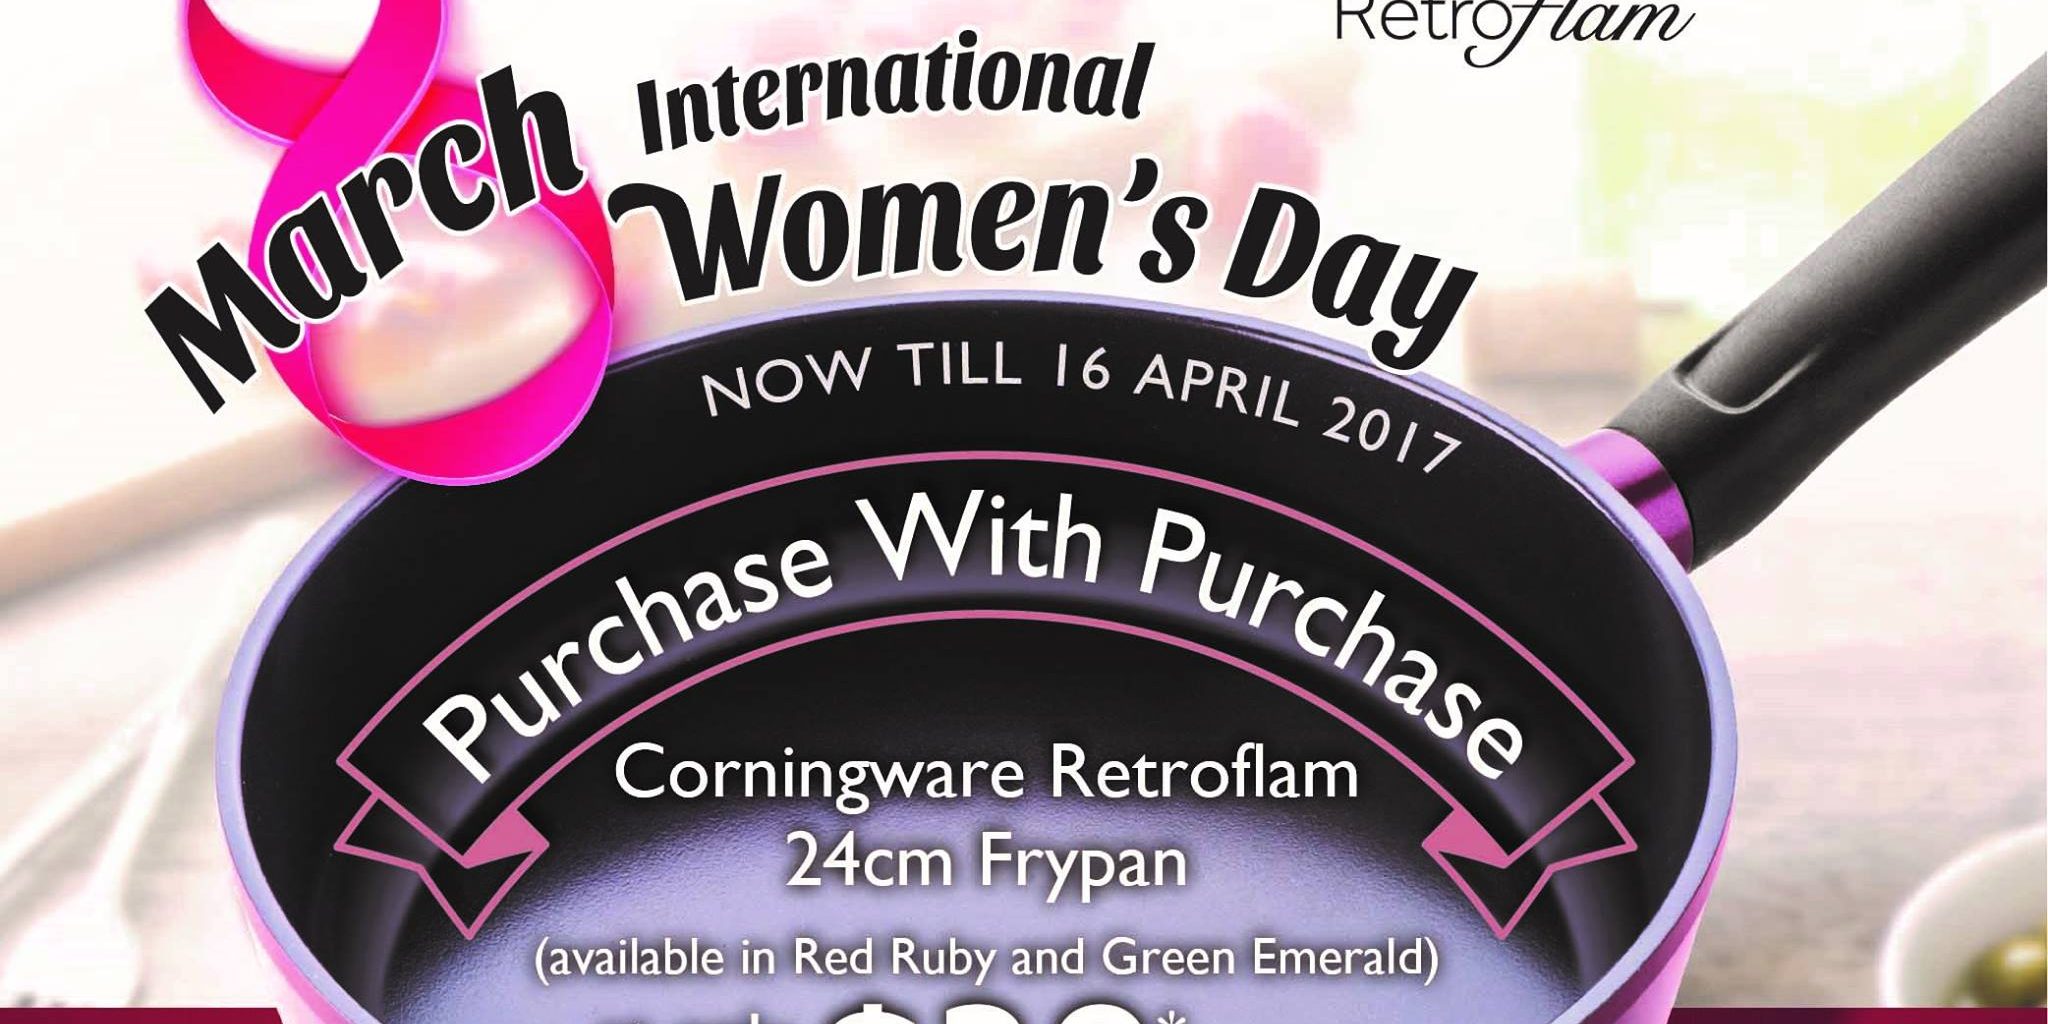 OG Singapore International Women’s Day 20% Off Corningware Retroflam Promotion ends 16 Apr 2017